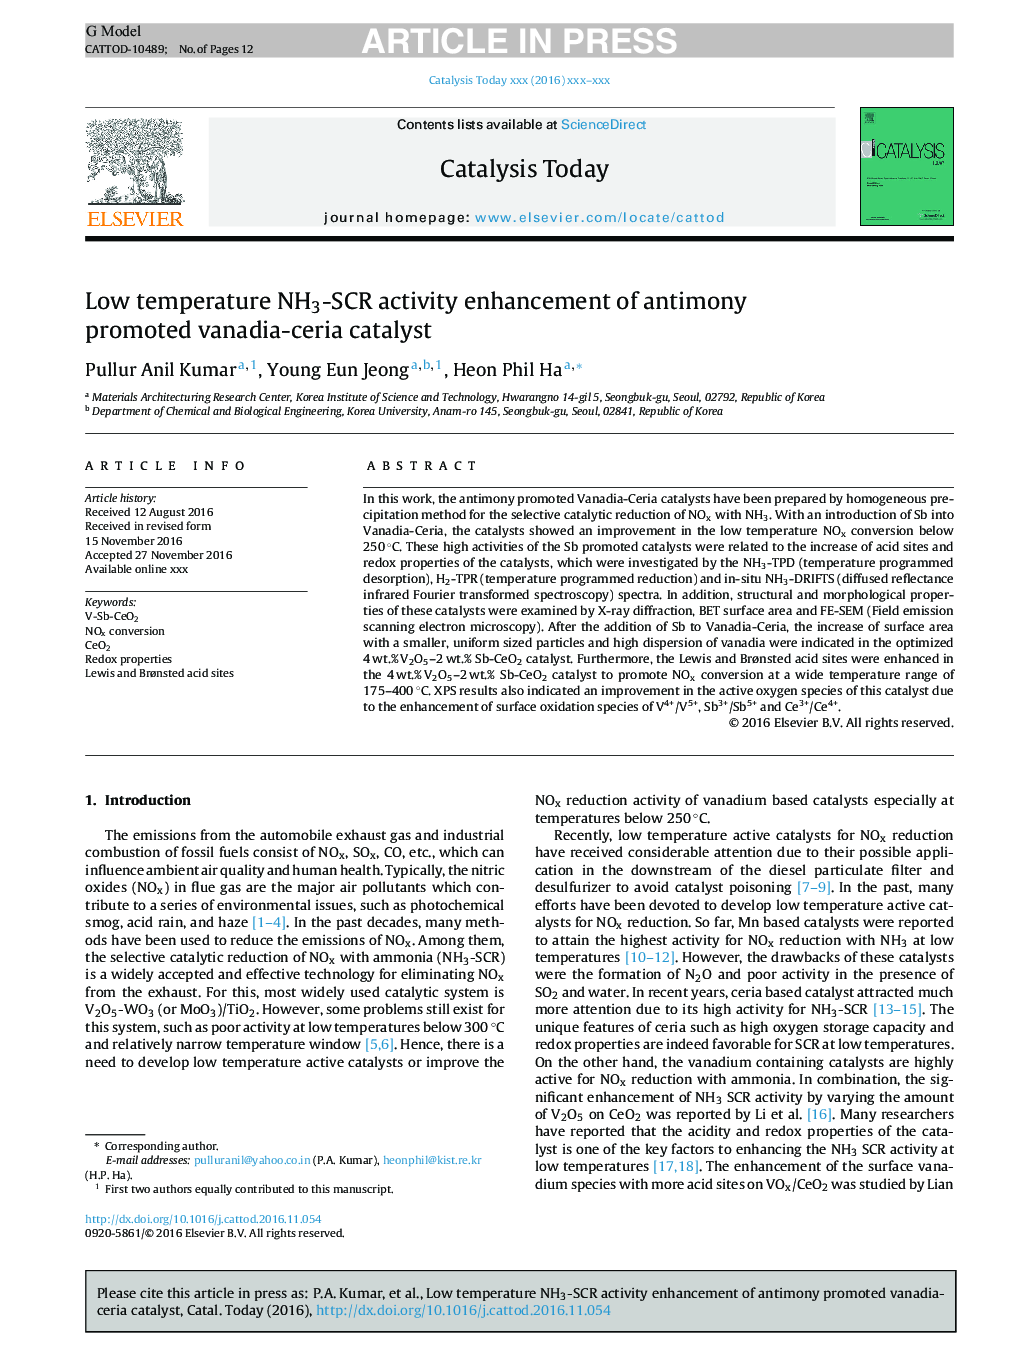 Low temperature NH3-SCR activity enhancement of antimony promoted vanadia-ceria catalyst